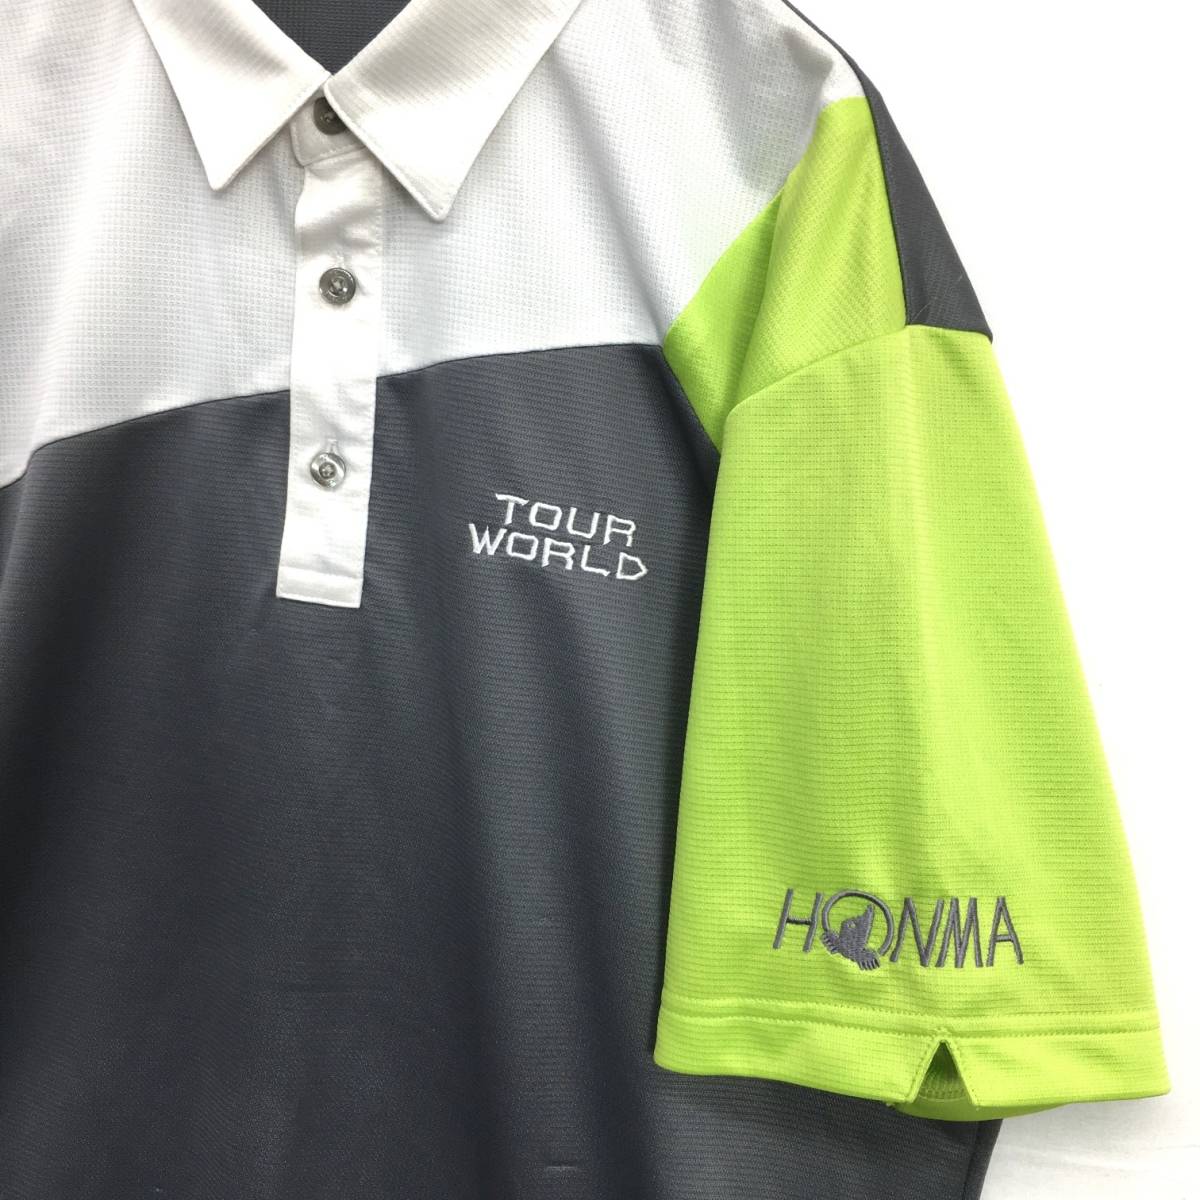 HZ9841★HONMA : TOUR WORLD ゴルフシャツ★L★白/グレー/イエロー 本間ゴルフ ポロシャツの画像2